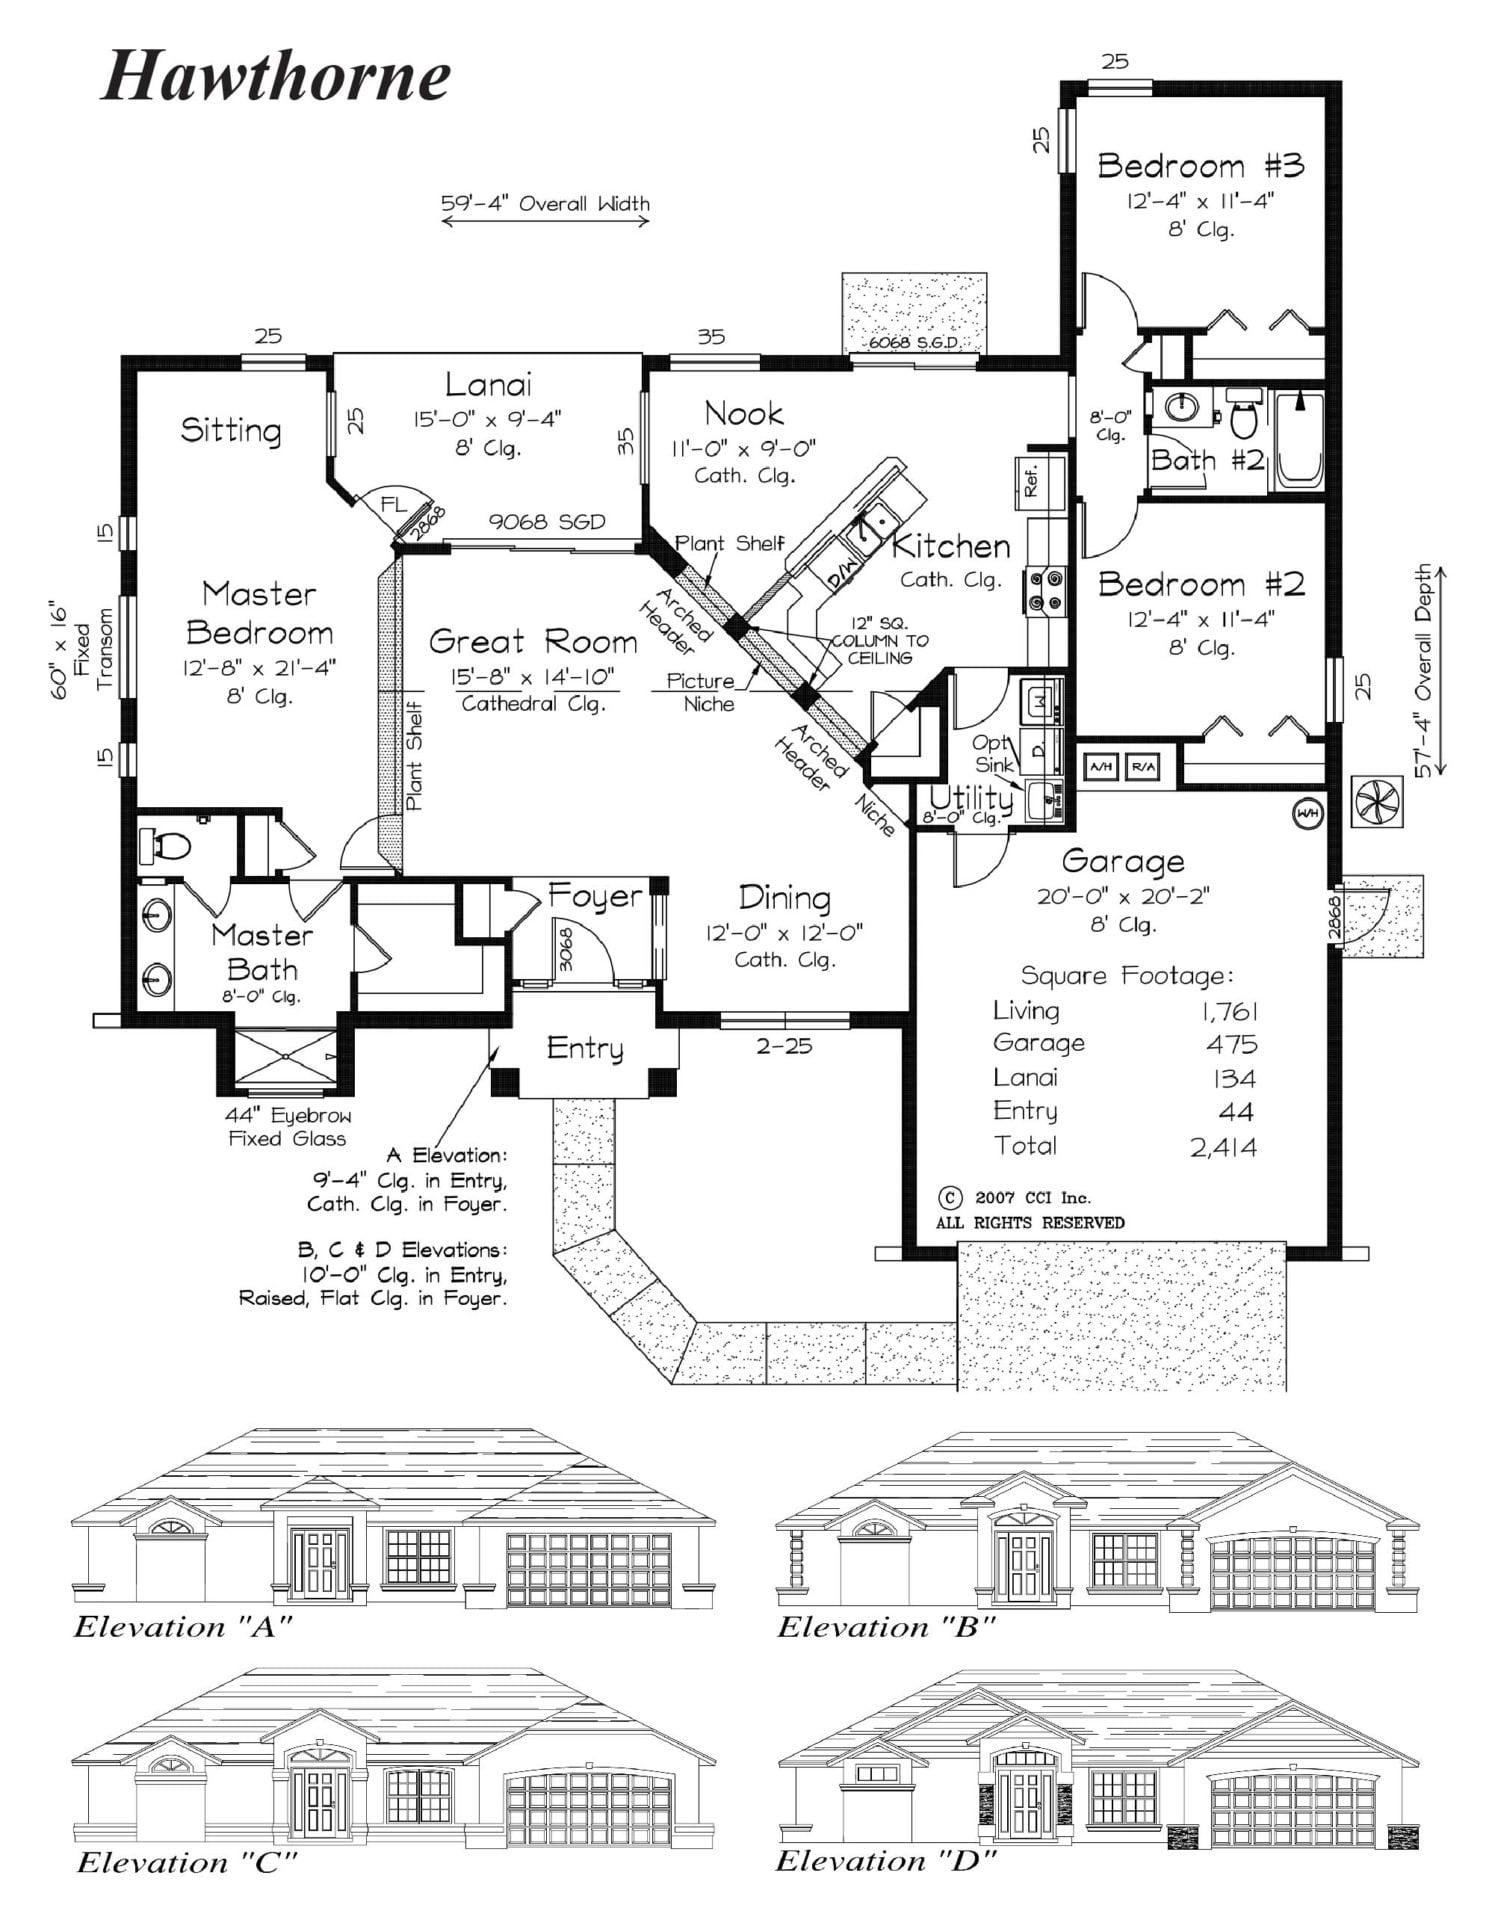 Hawthorne - Floor Plan - Curington Homes - Ocala Florida Contractor.jpg Hawthorne-Floor-Plan-Curington-Homes-Ocala-Florida-Contractor